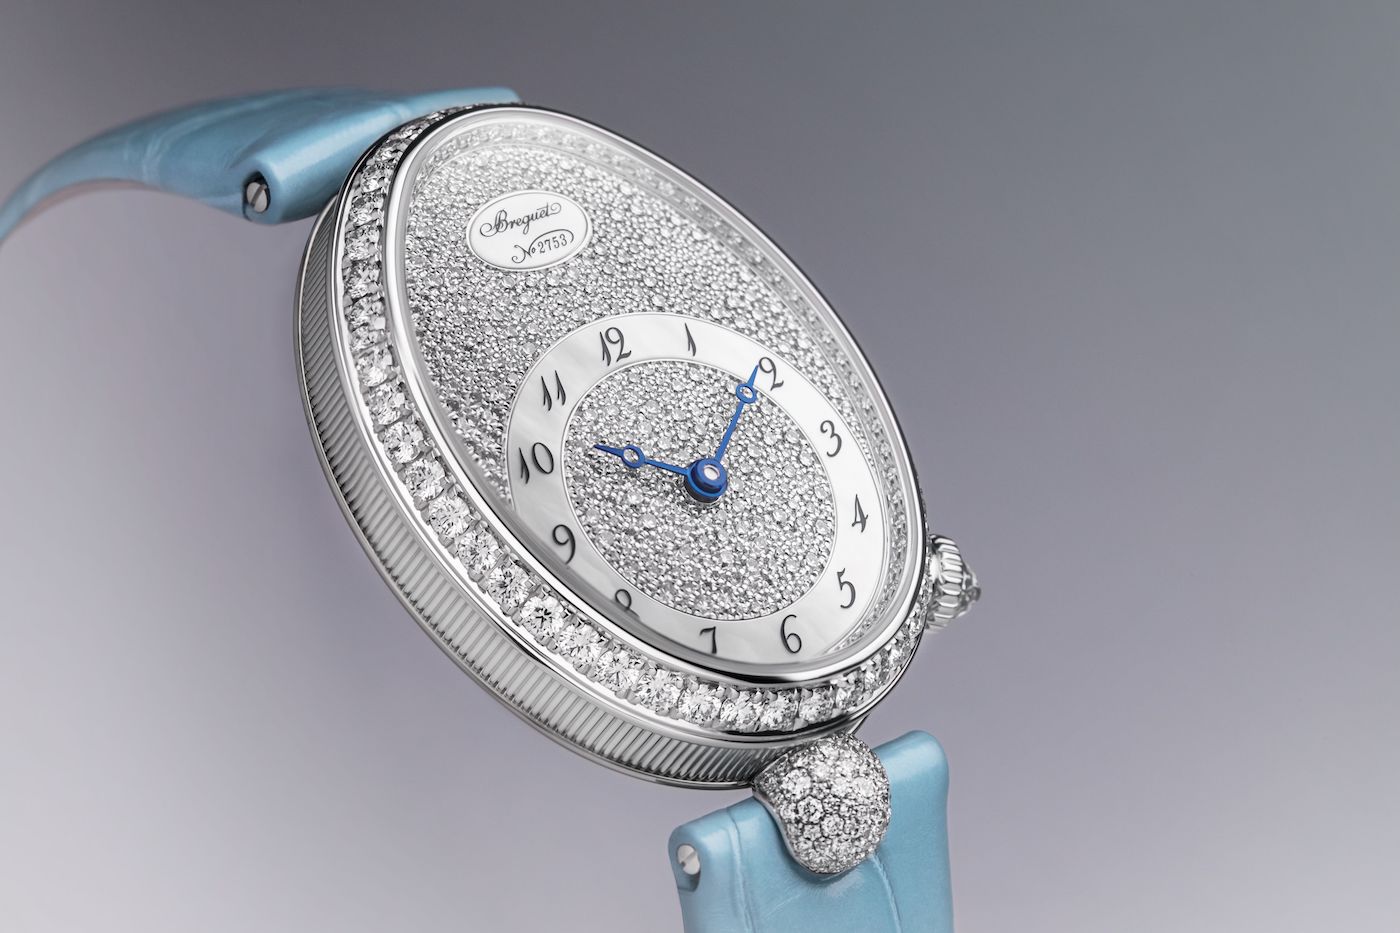 Breguet unveils its new diamond-set Reine de Naples 8938